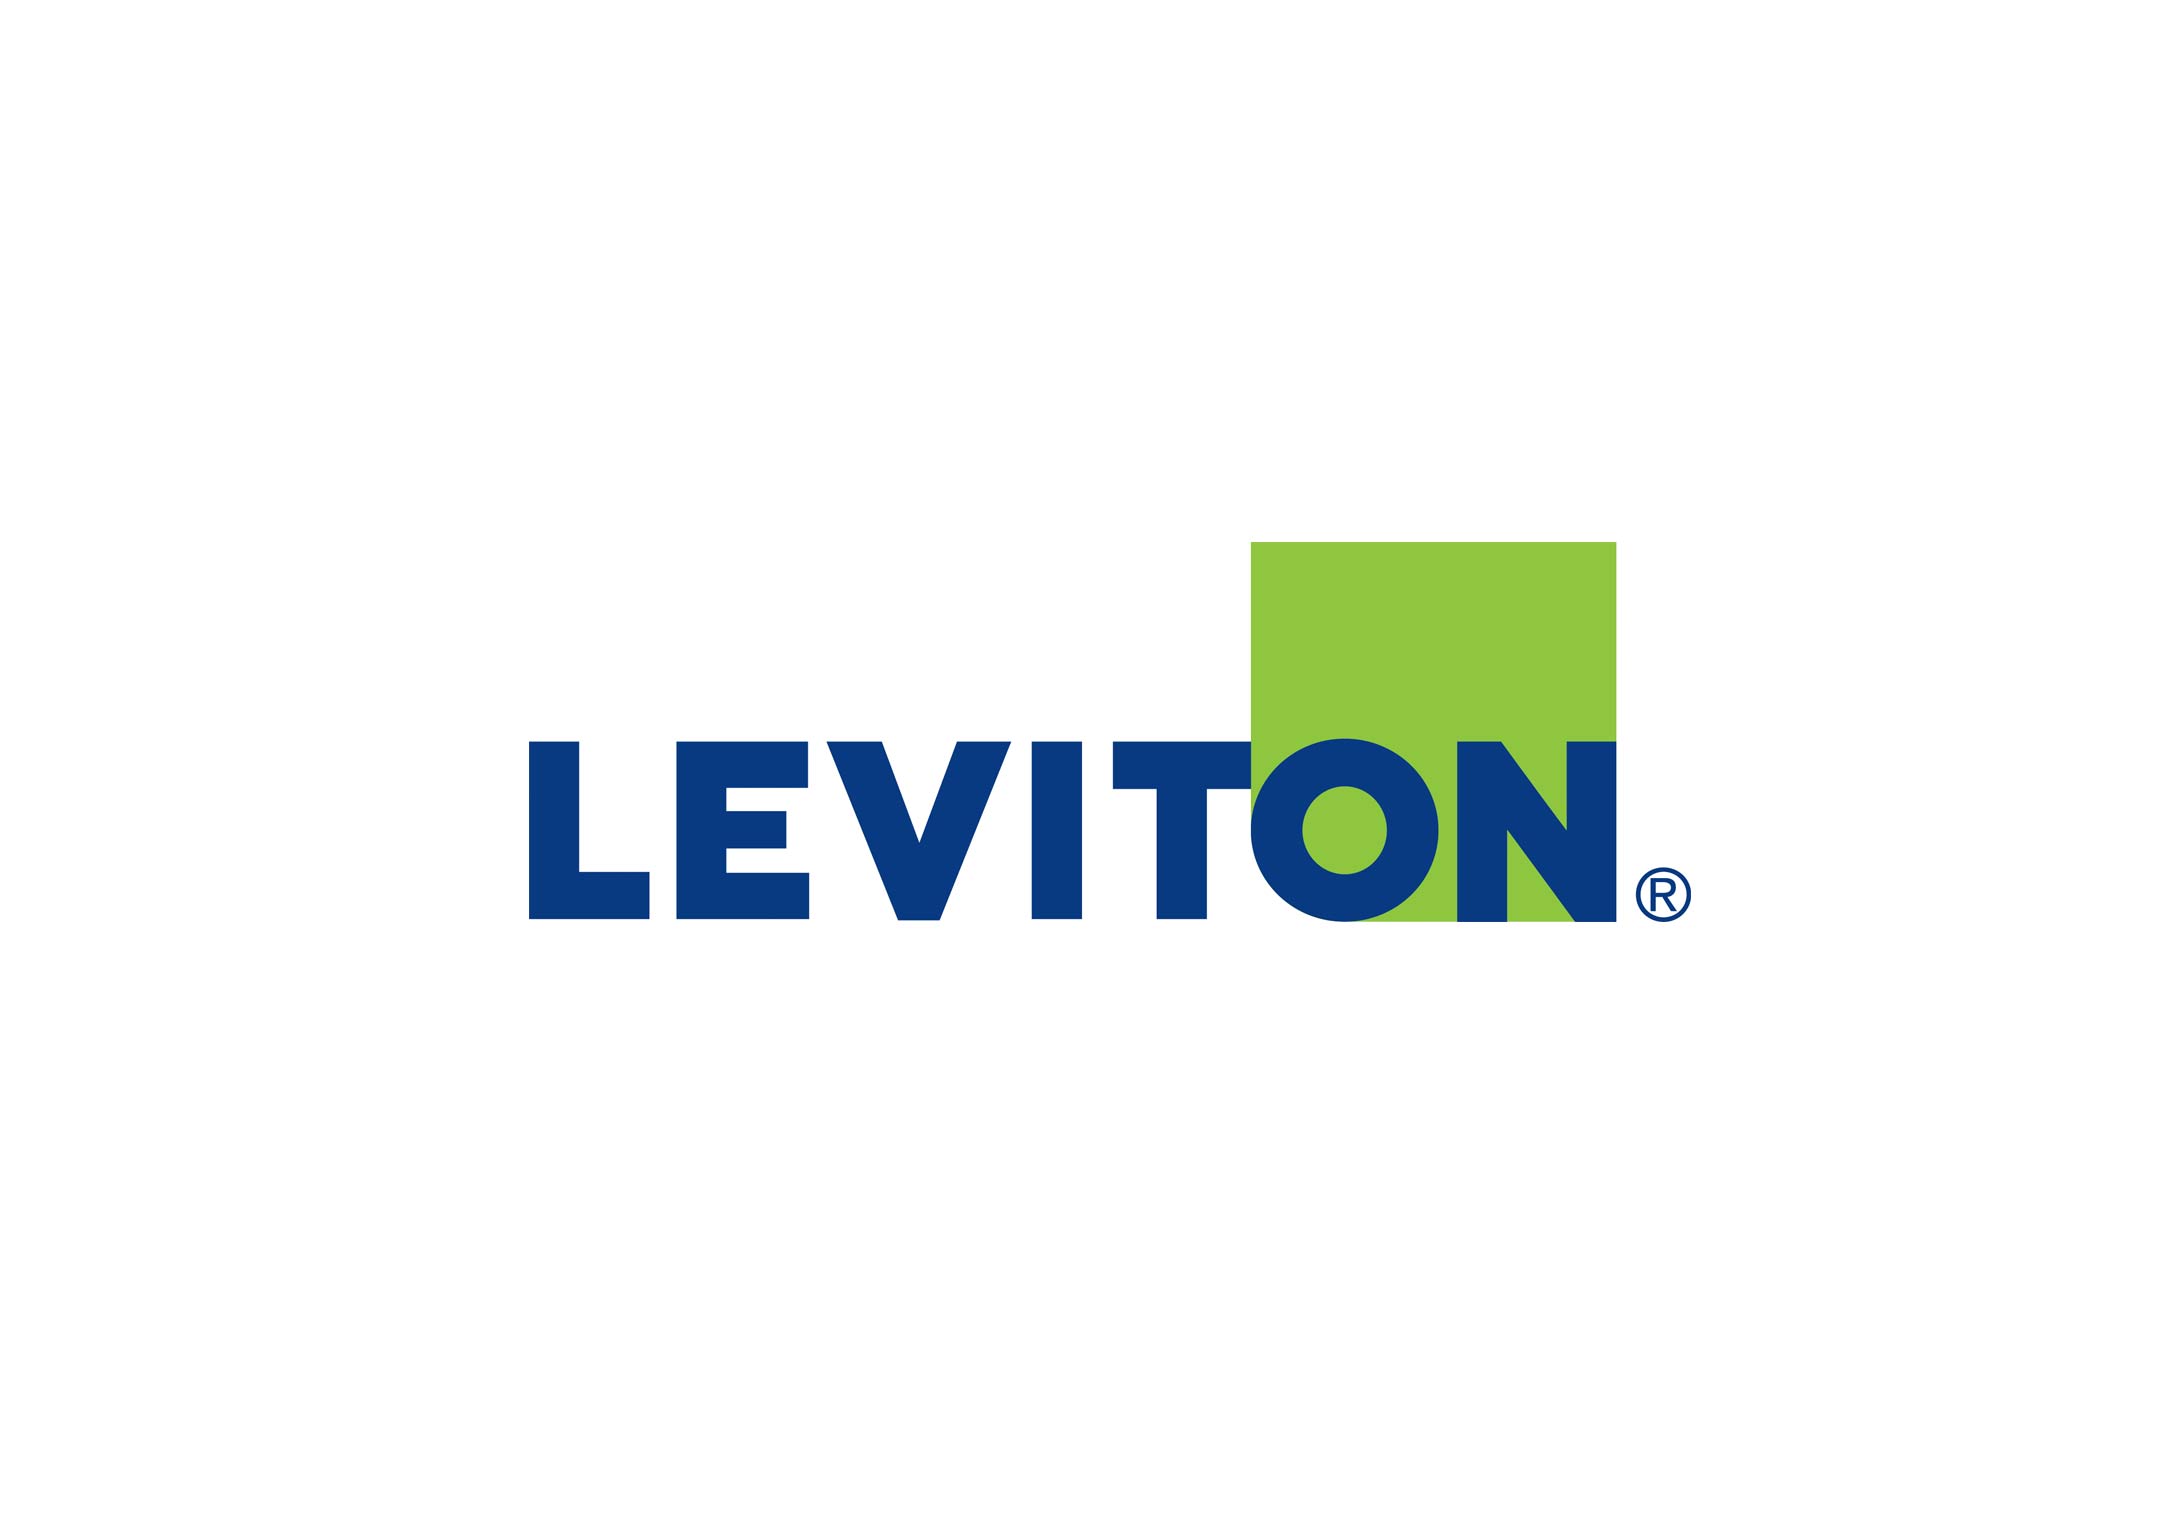 C-leviton-logos